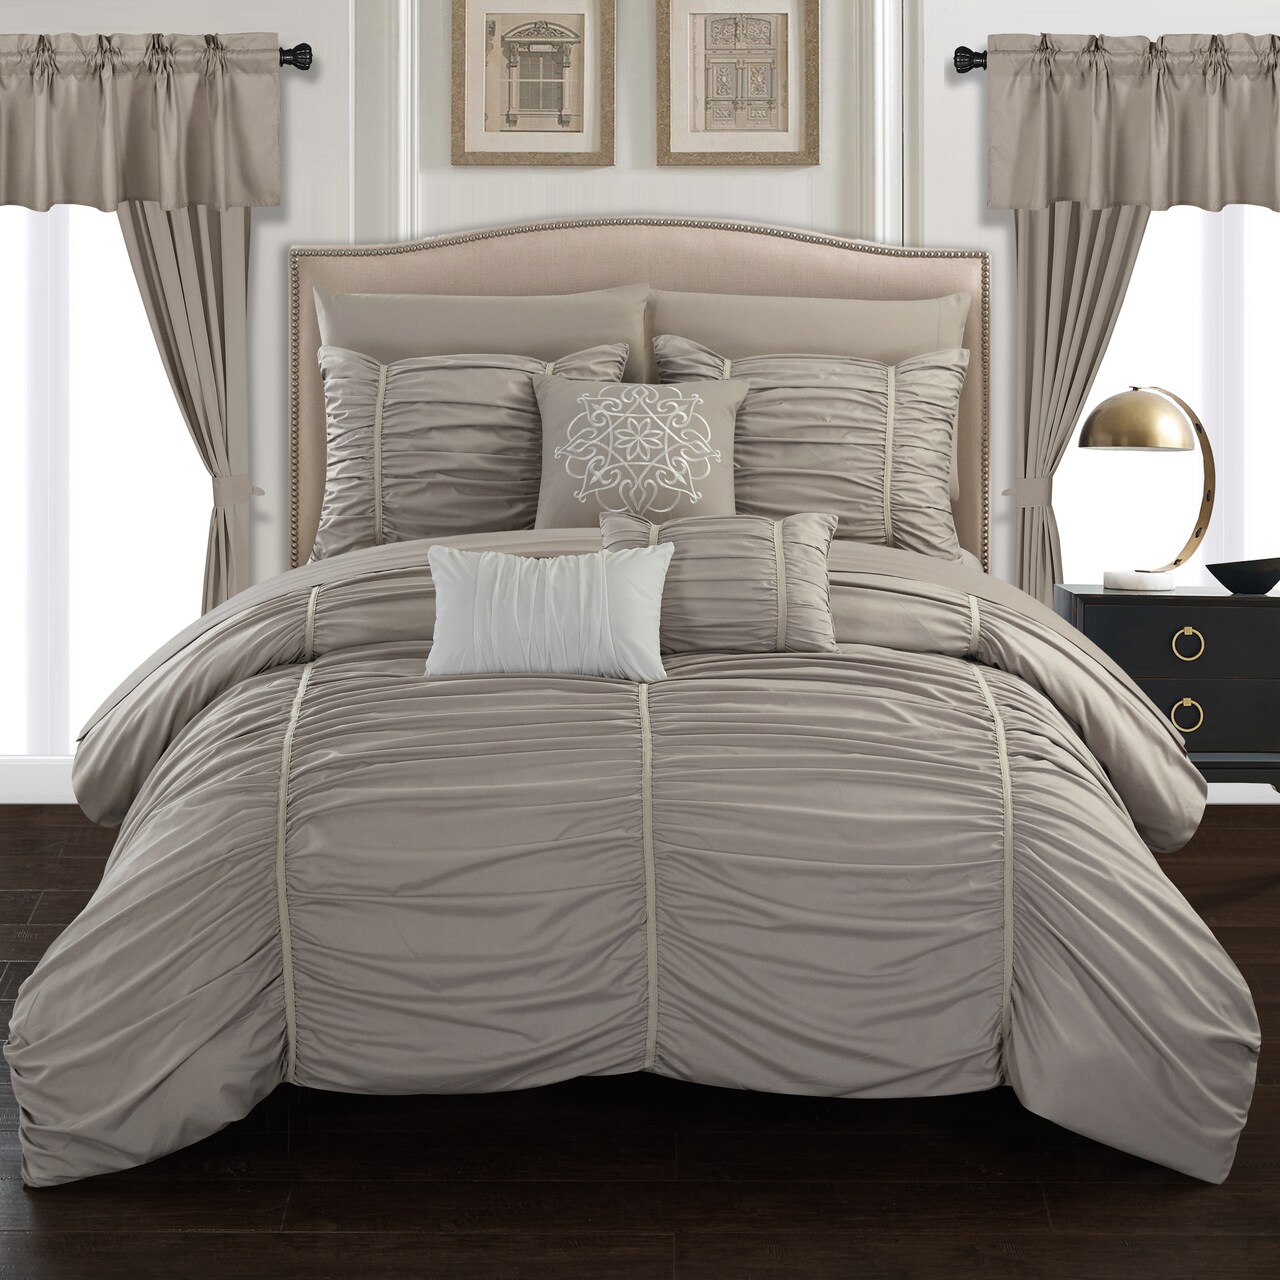 LV Inspired Bed Set